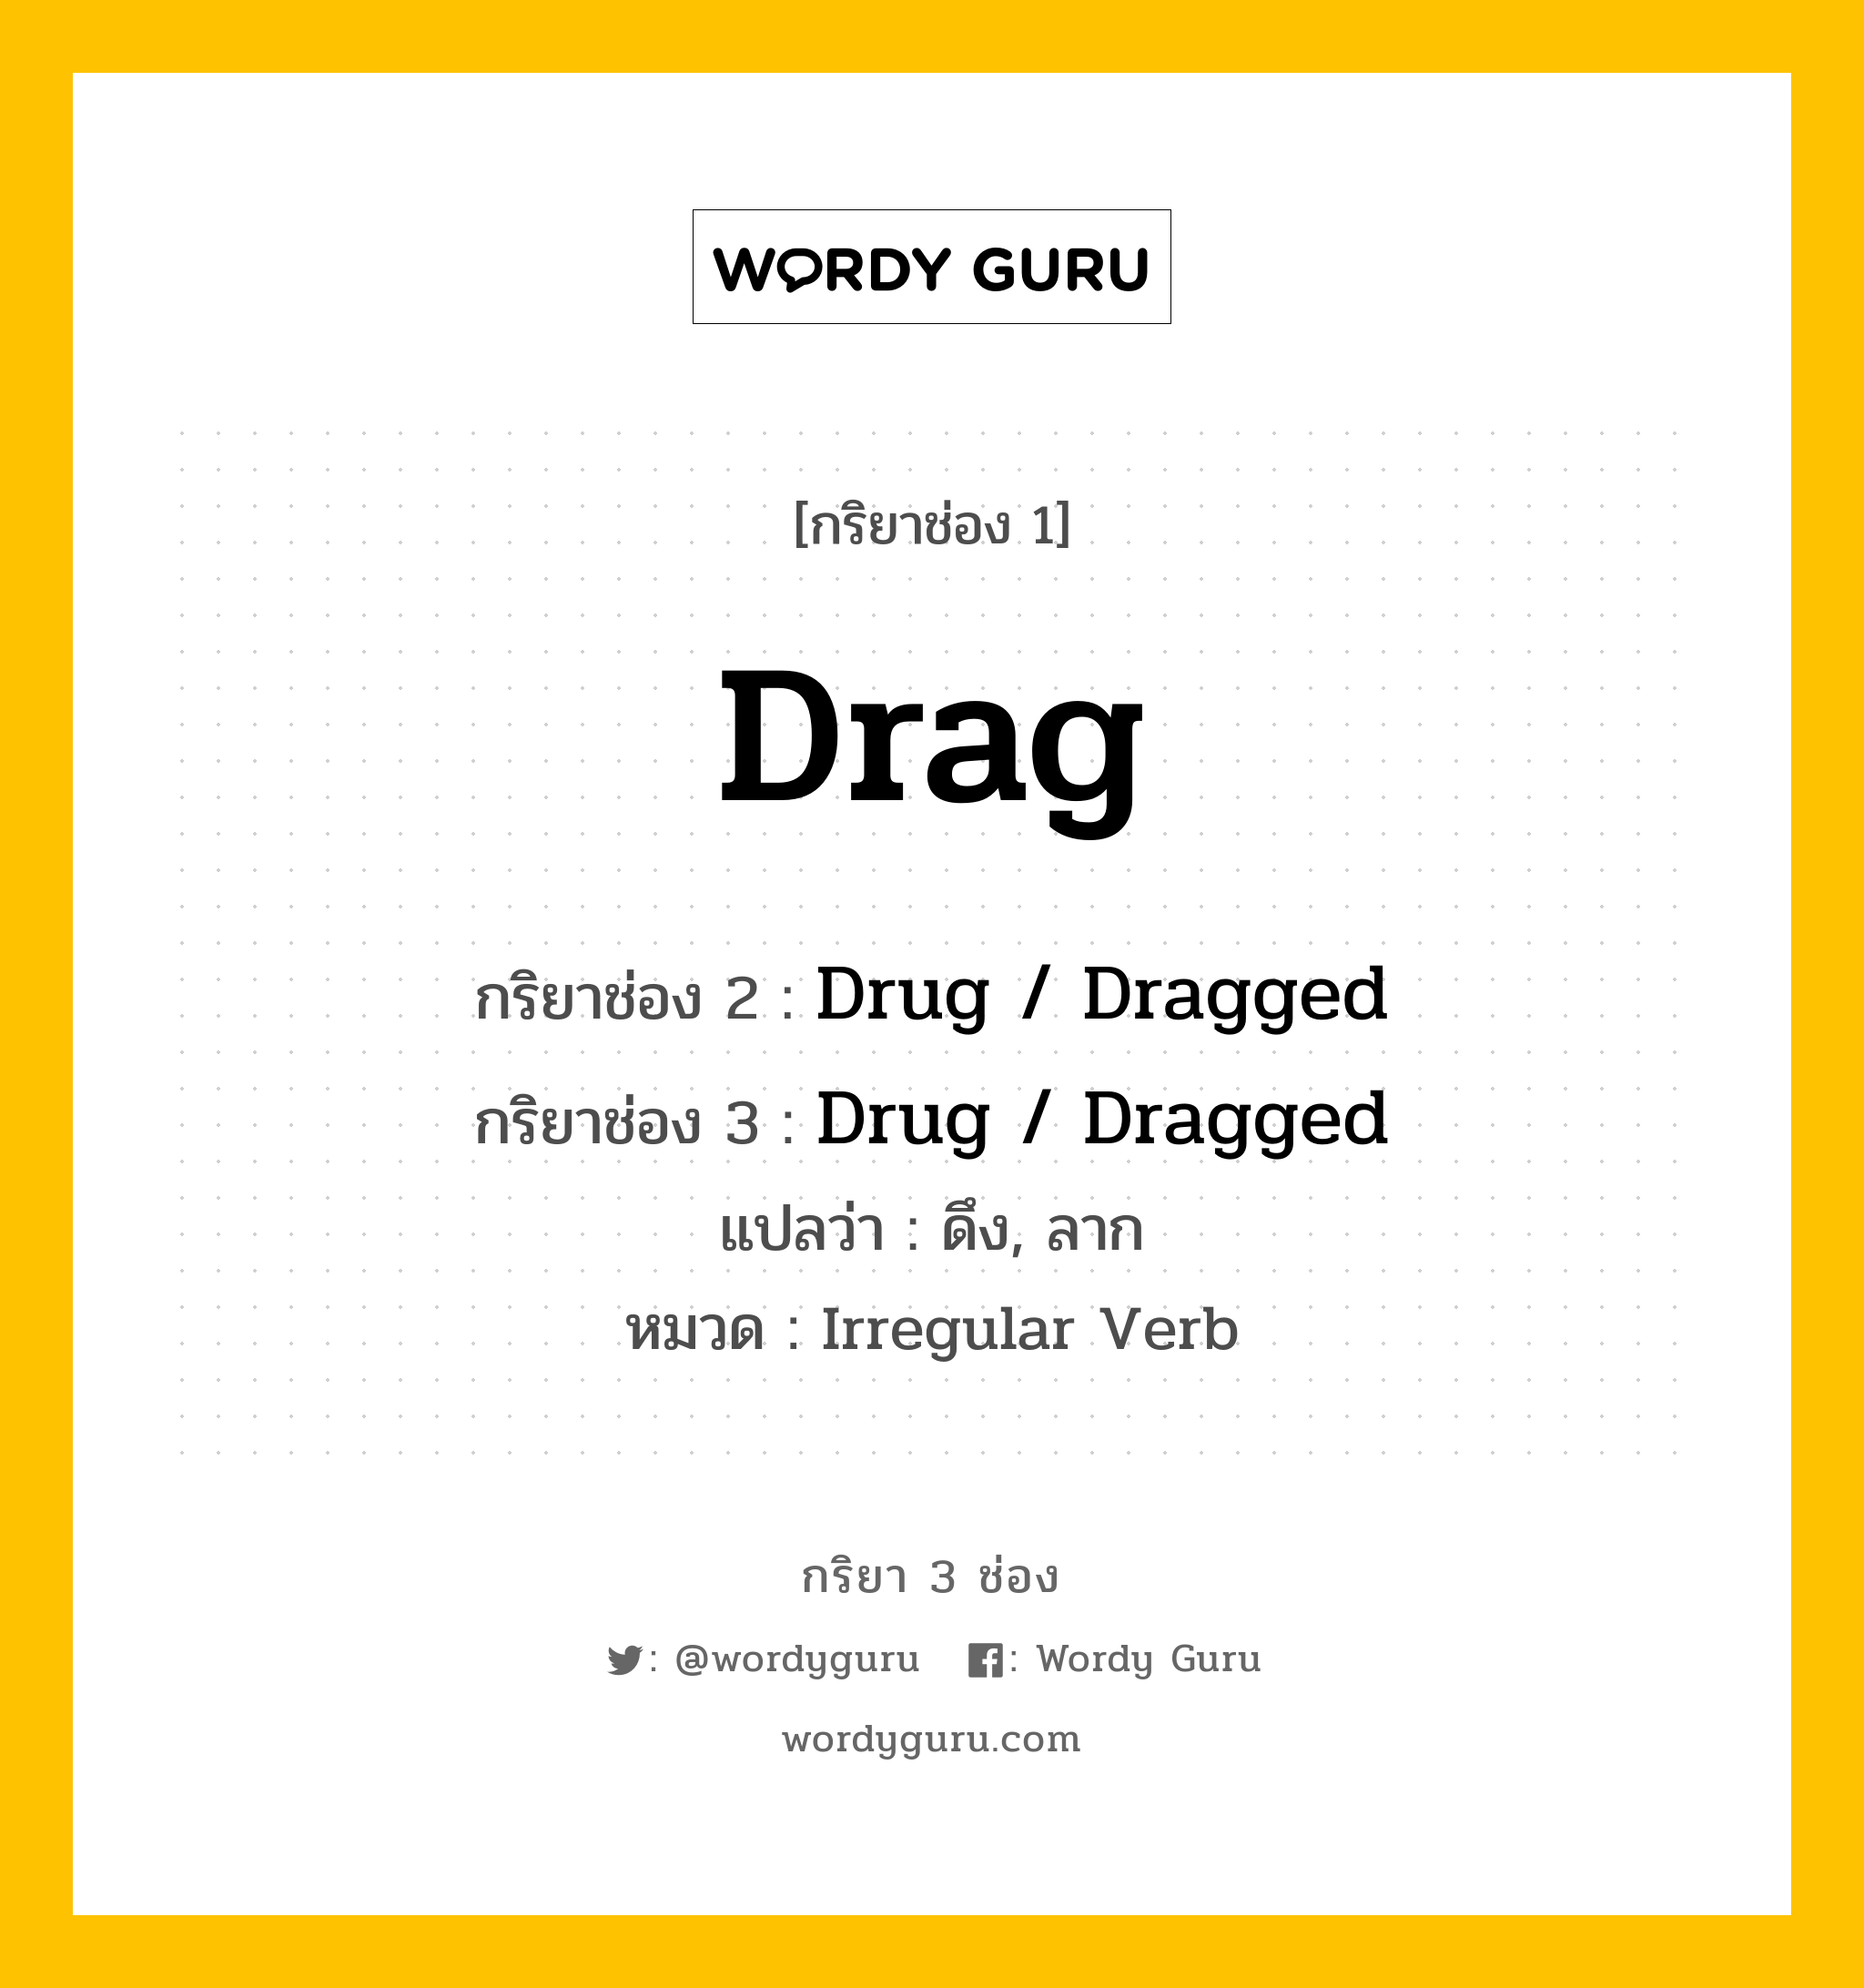 Drag มีกริยา 3 ช่องอะไรบ้าง? คำศัพท์ในกลุ่มประเภท Irregular Verb, กริยาช่อง 1 Drag กริยาช่อง 2 Drug / Dragged กริยาช่อง 3 Drug / Dragged แปลว่า ดึง, ลาก หมวด Irregular Verb หมวด Irregular Verb